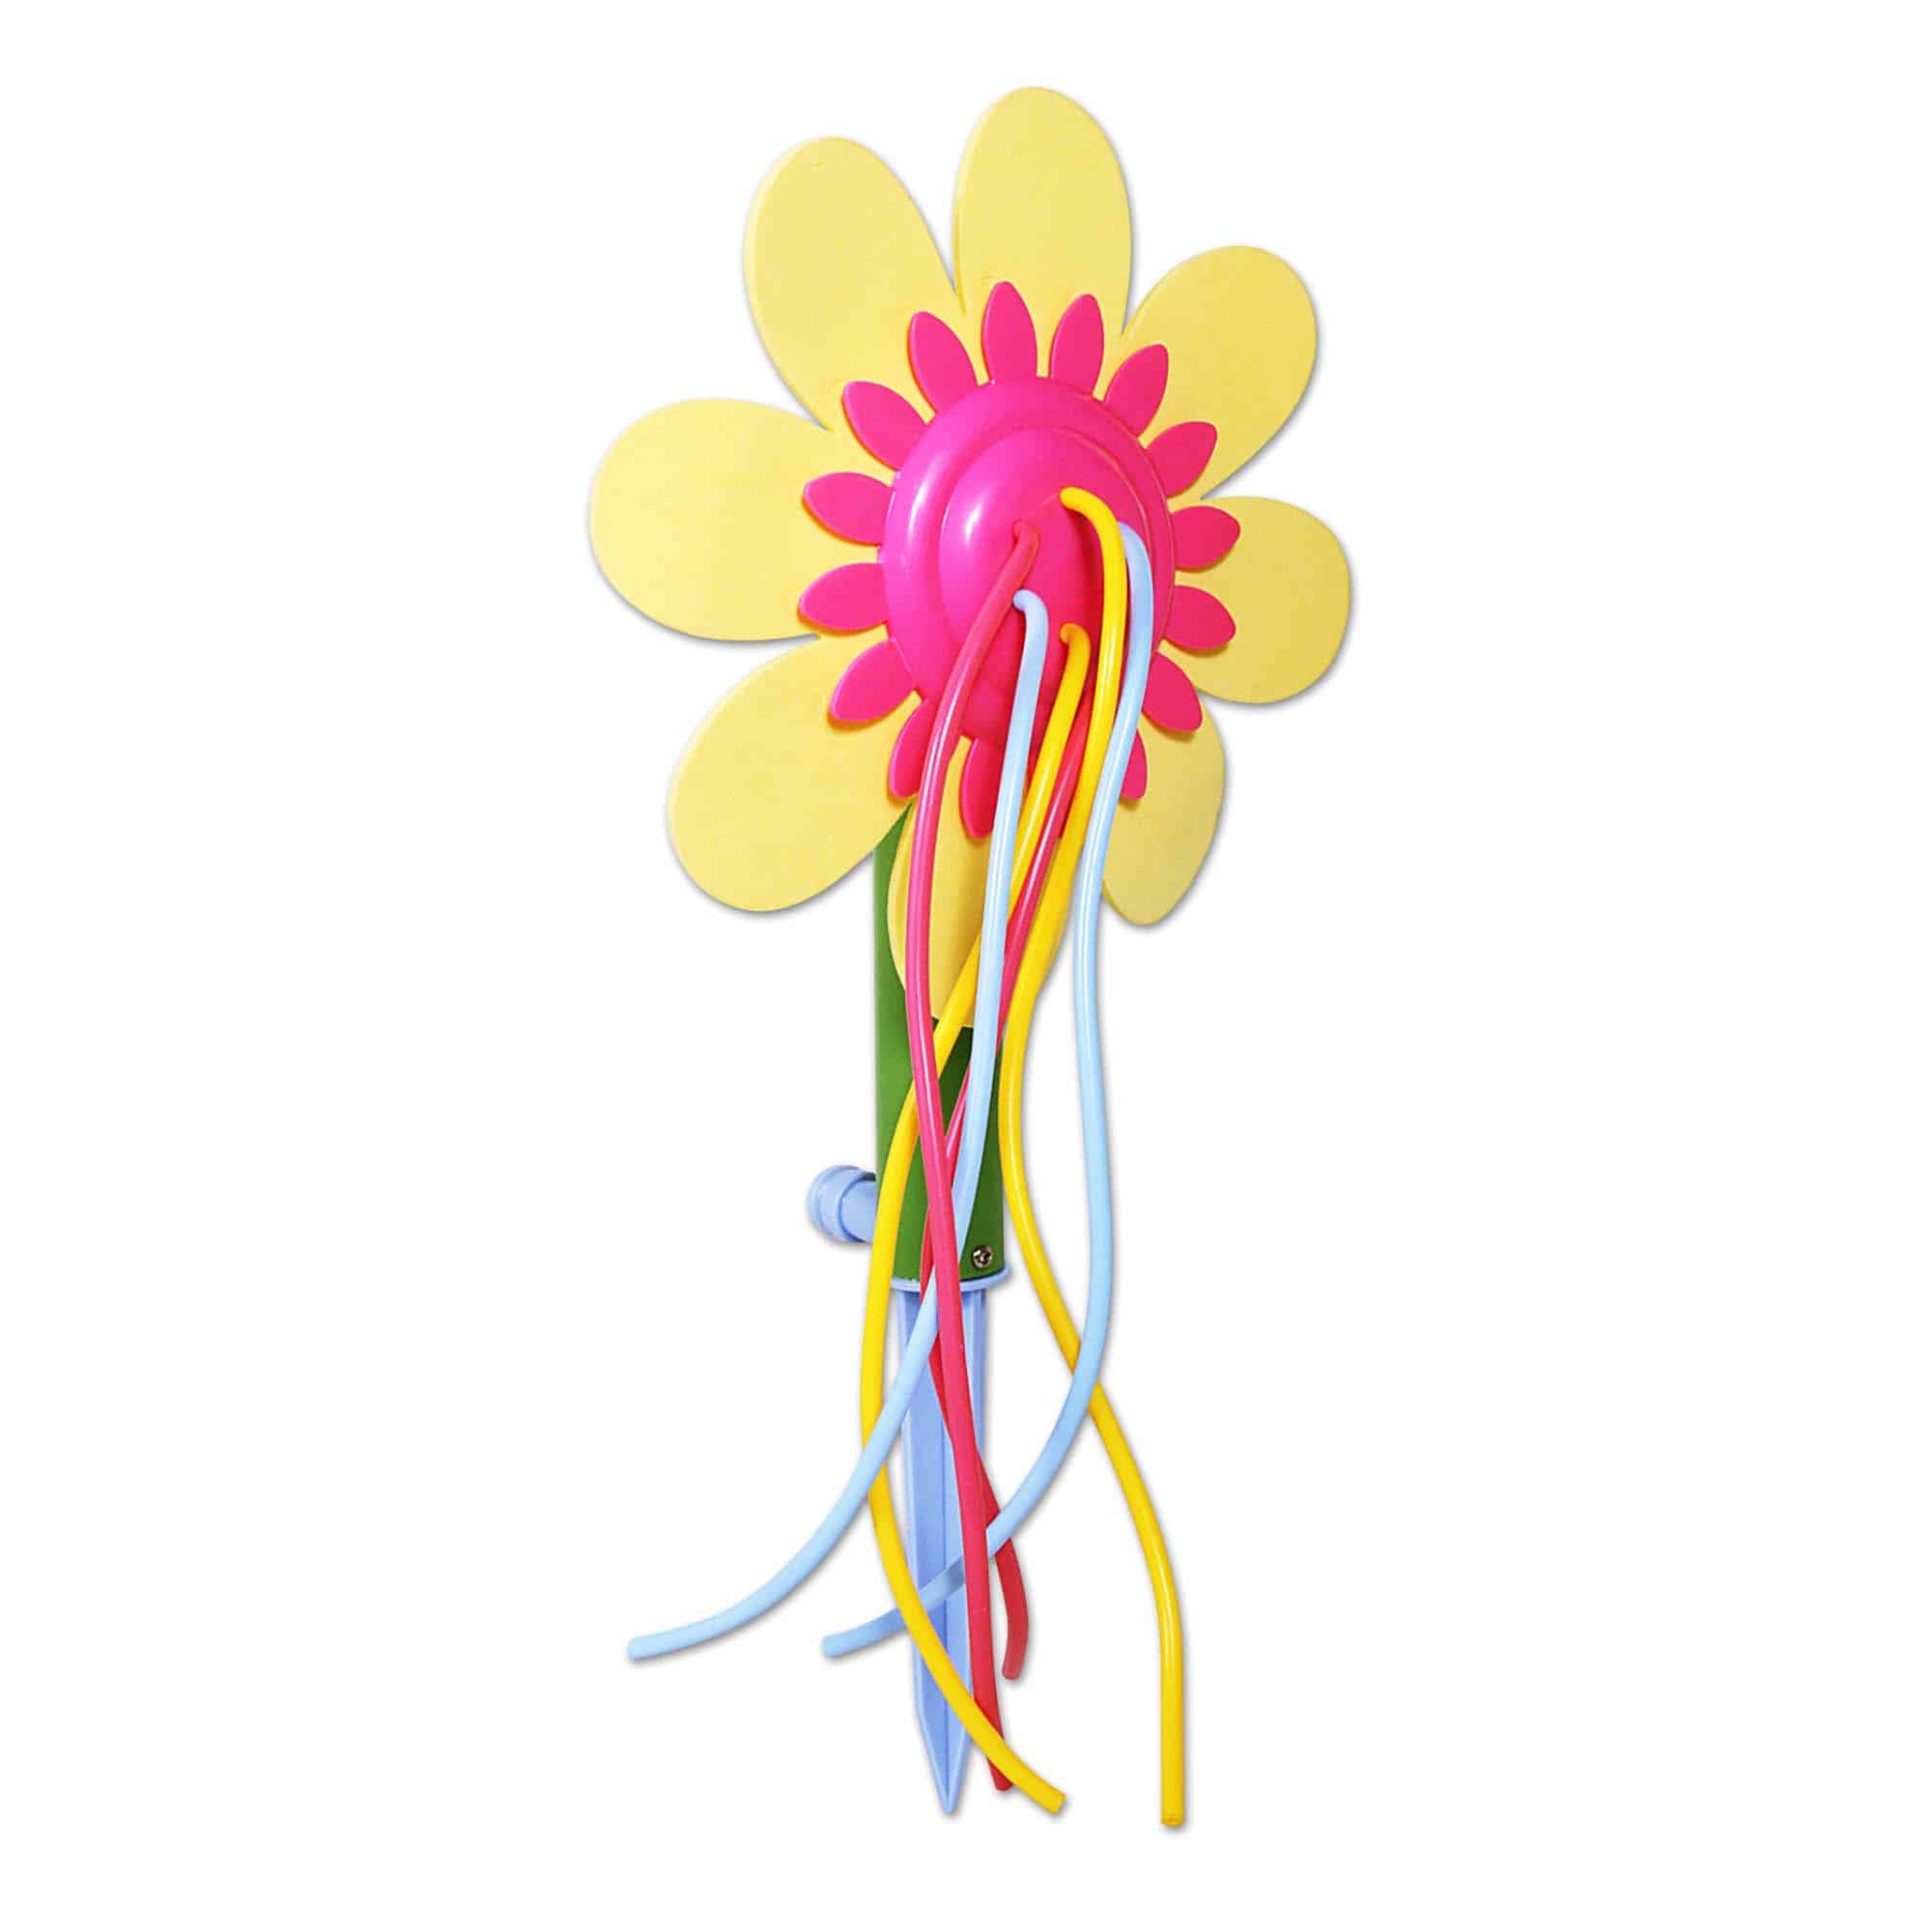 Wassersprinkler Blume SPLASH & FUN Mehrfarbig 2000573774900 1